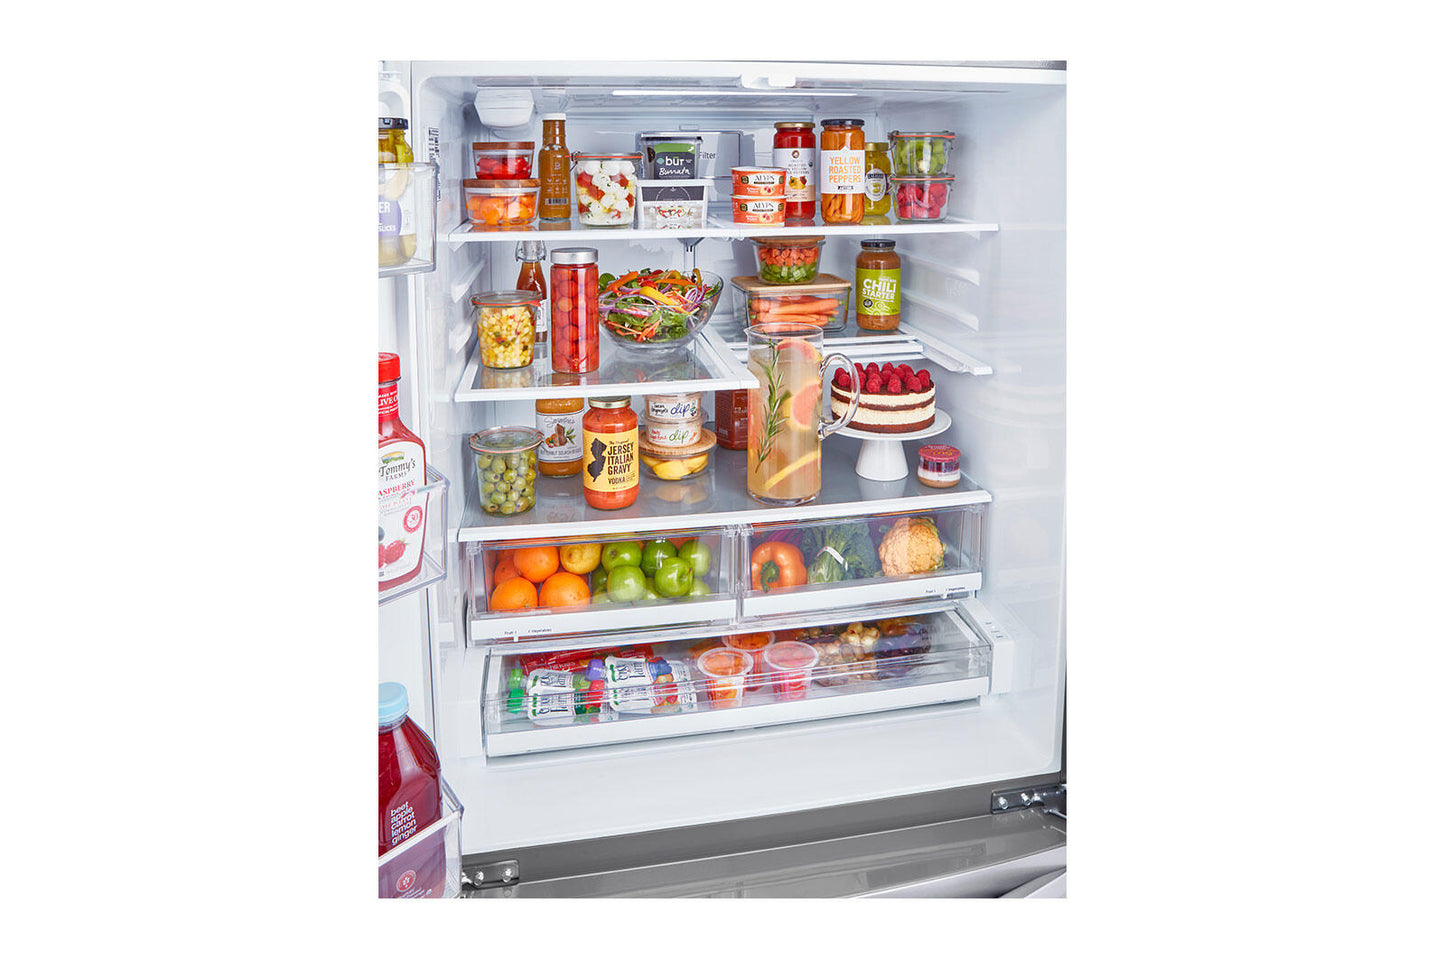 Lg LMXC22626S 22 Cu Ft. Smart Counter Depth Double Freezer Refrigerator